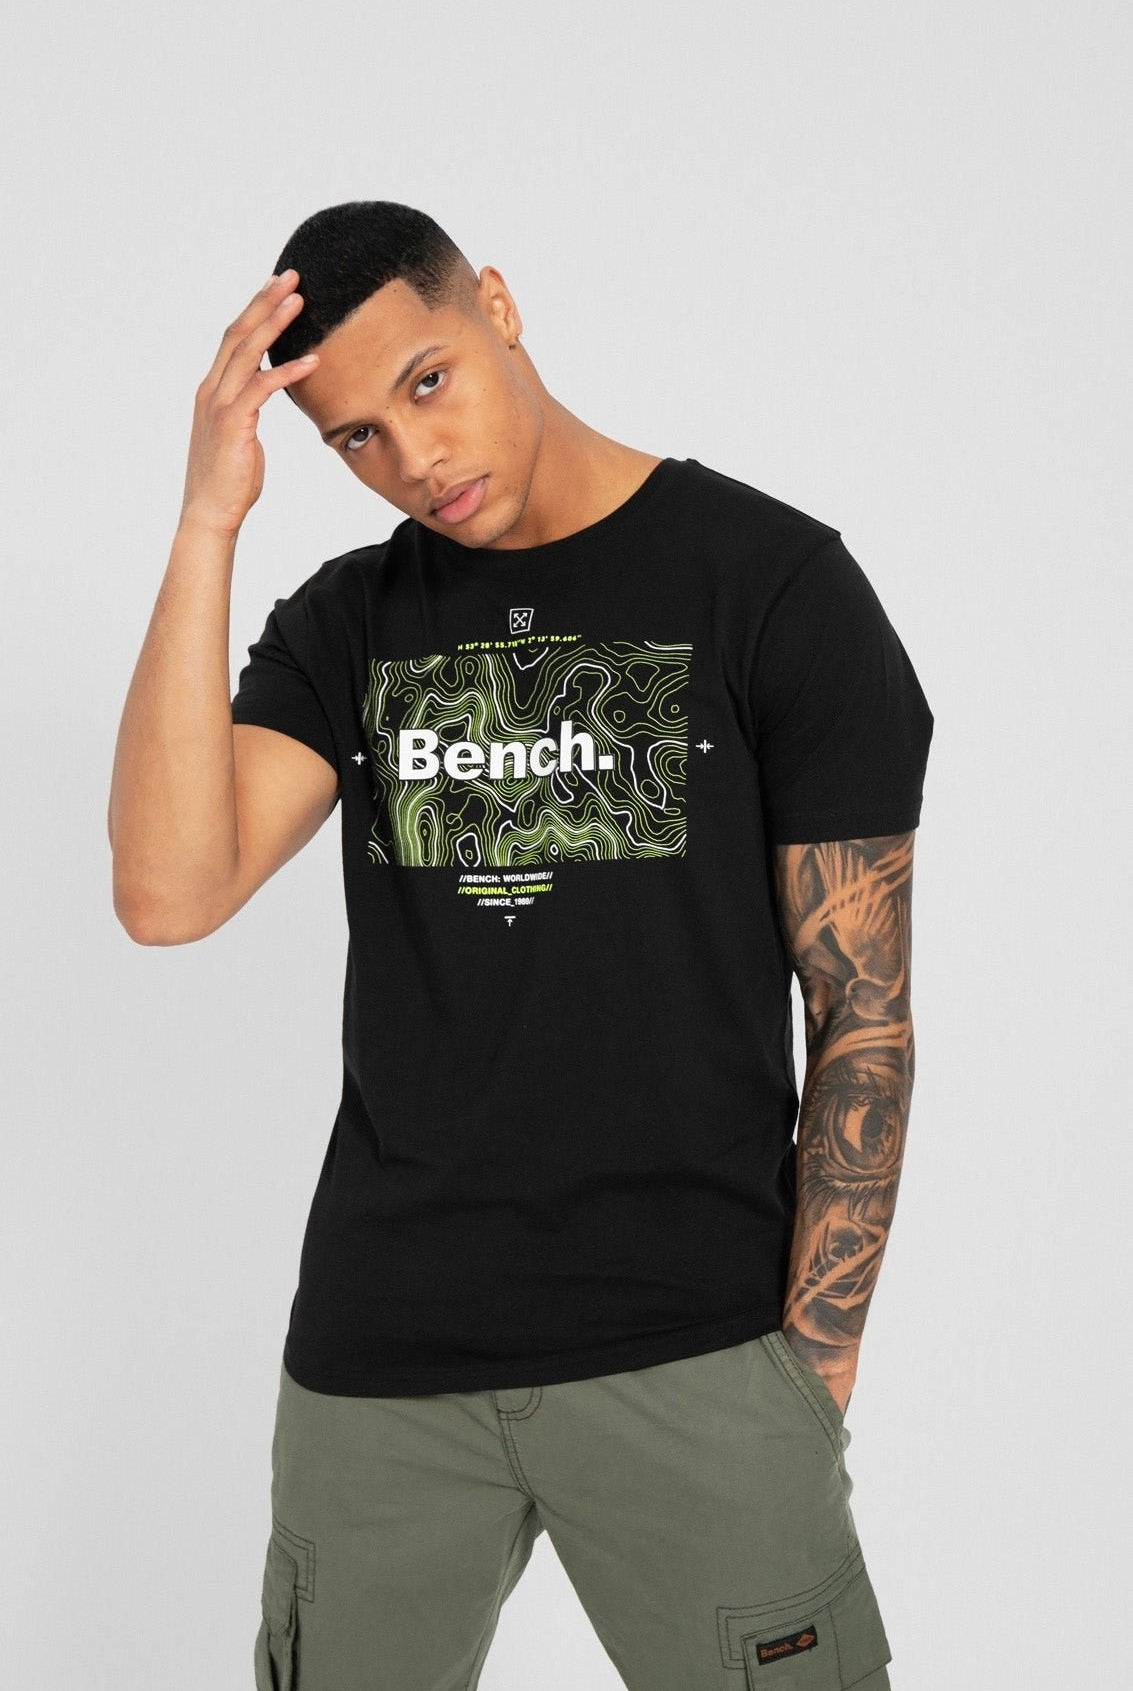 Mens 'HAWES' T-Shirt - BLACK - Shop at www.Bench.co.uk #LoveMyHood